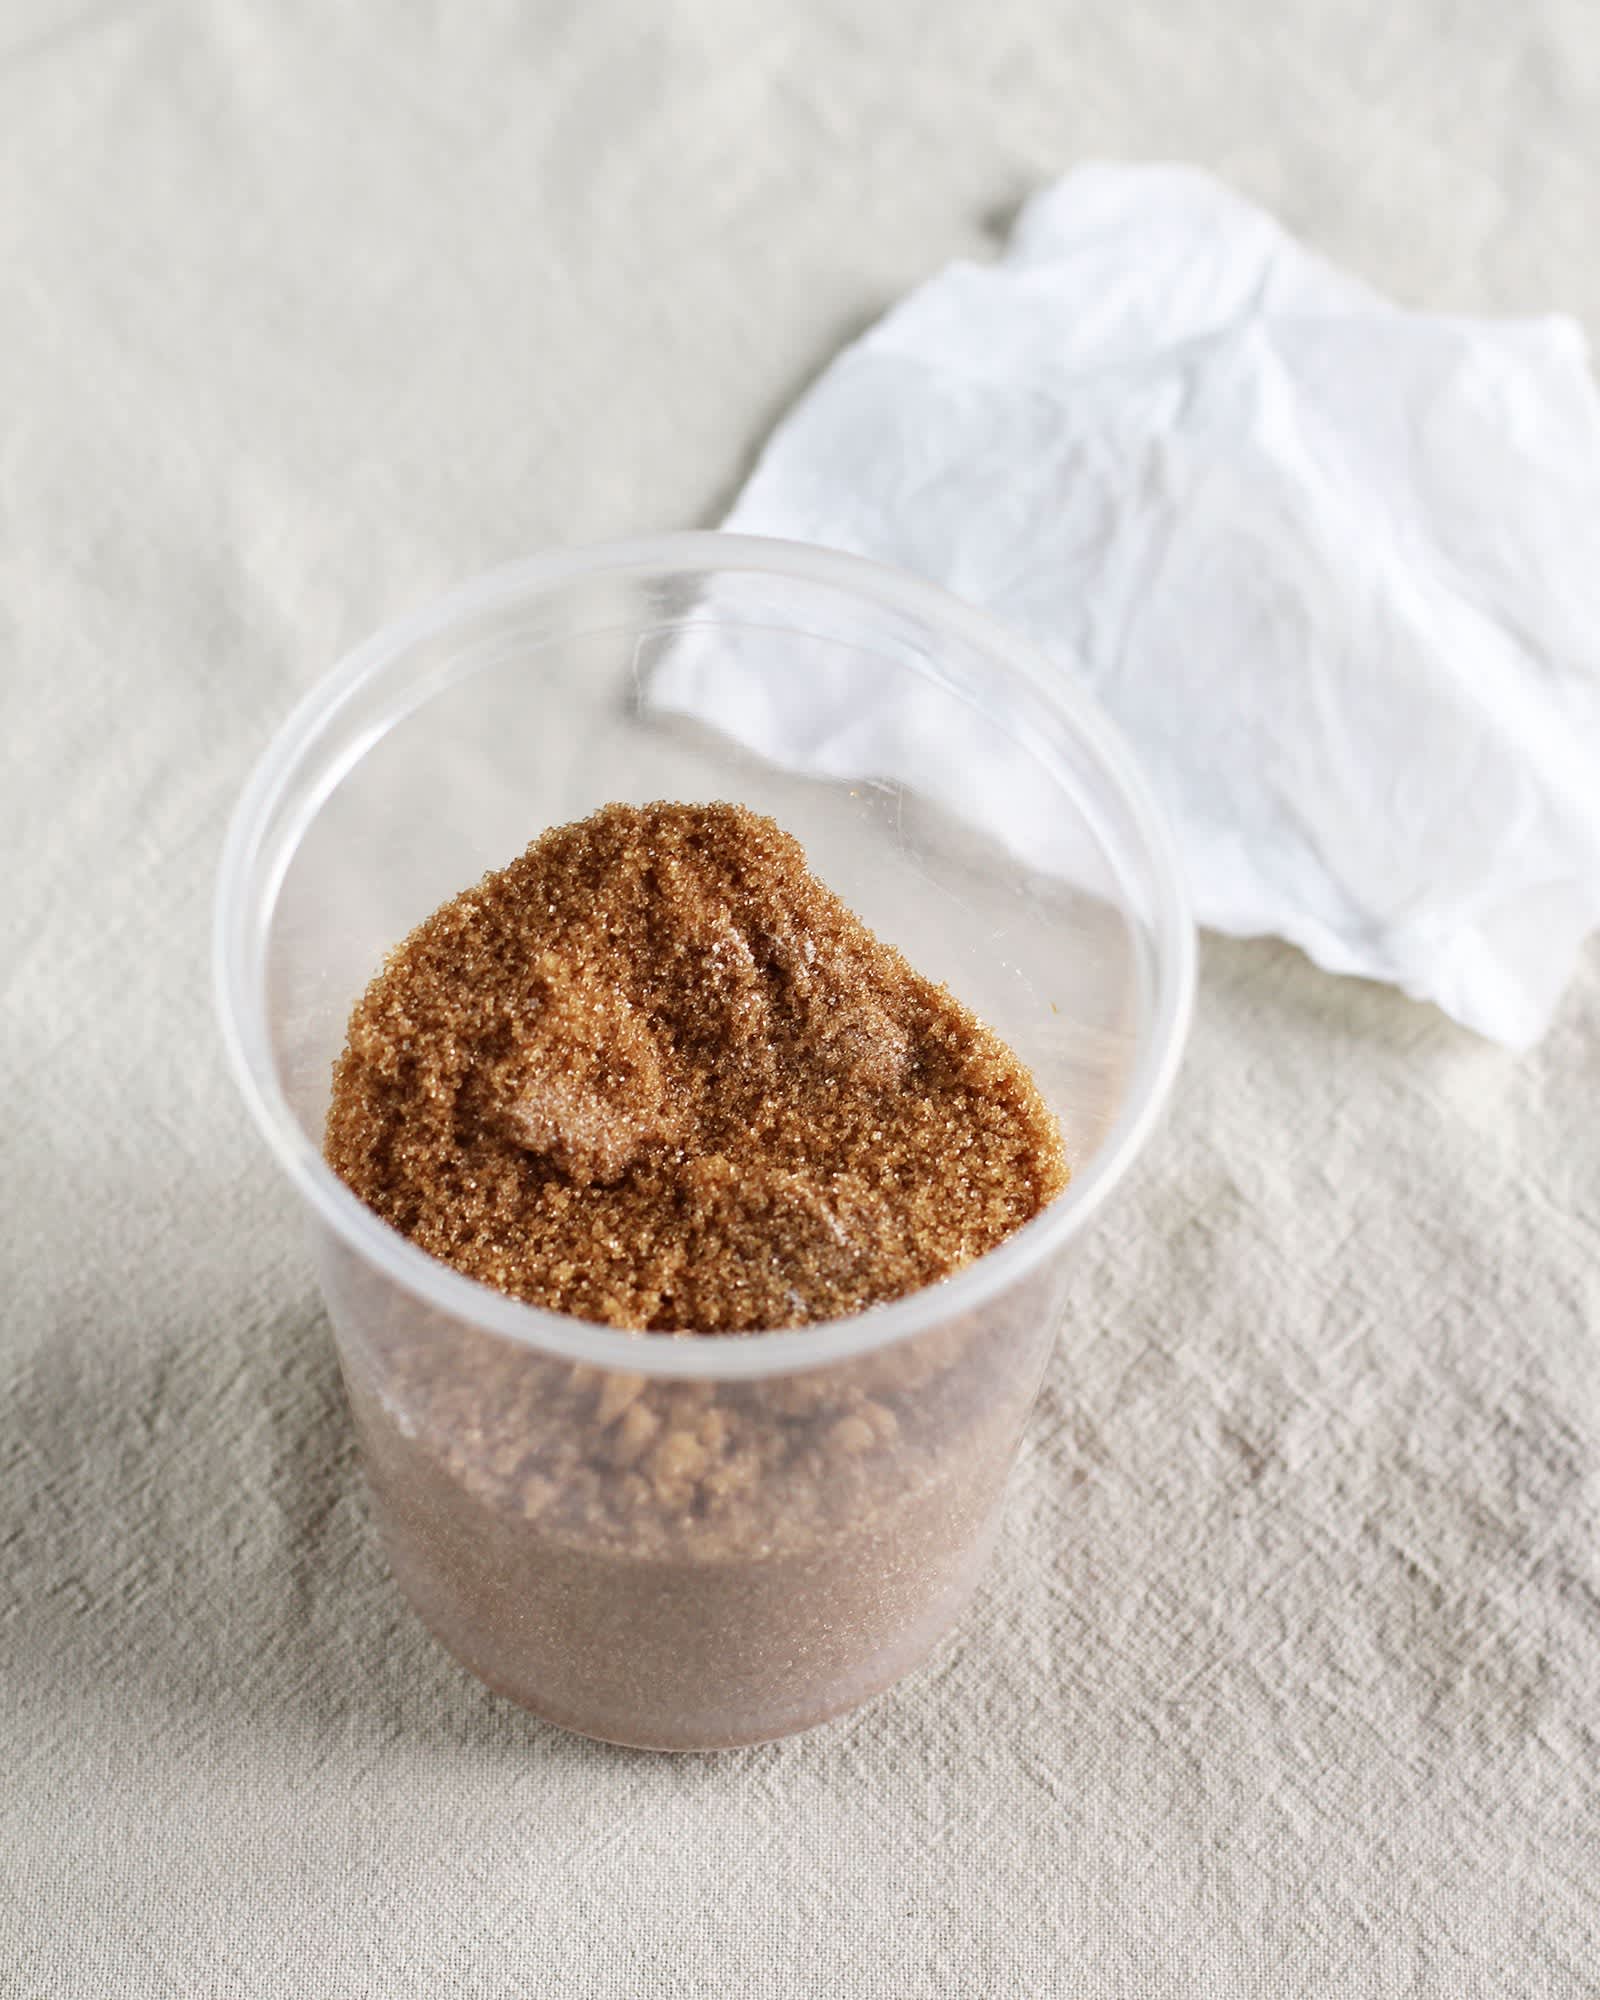 Terra Cotta Brown Sugar Saver Food-Safe Sugar Preserver for Long-Term Use  Brown Sugar Softener for Cookies Dried Fruits Marshmallows Hummingbird  Design - JBK Pottery